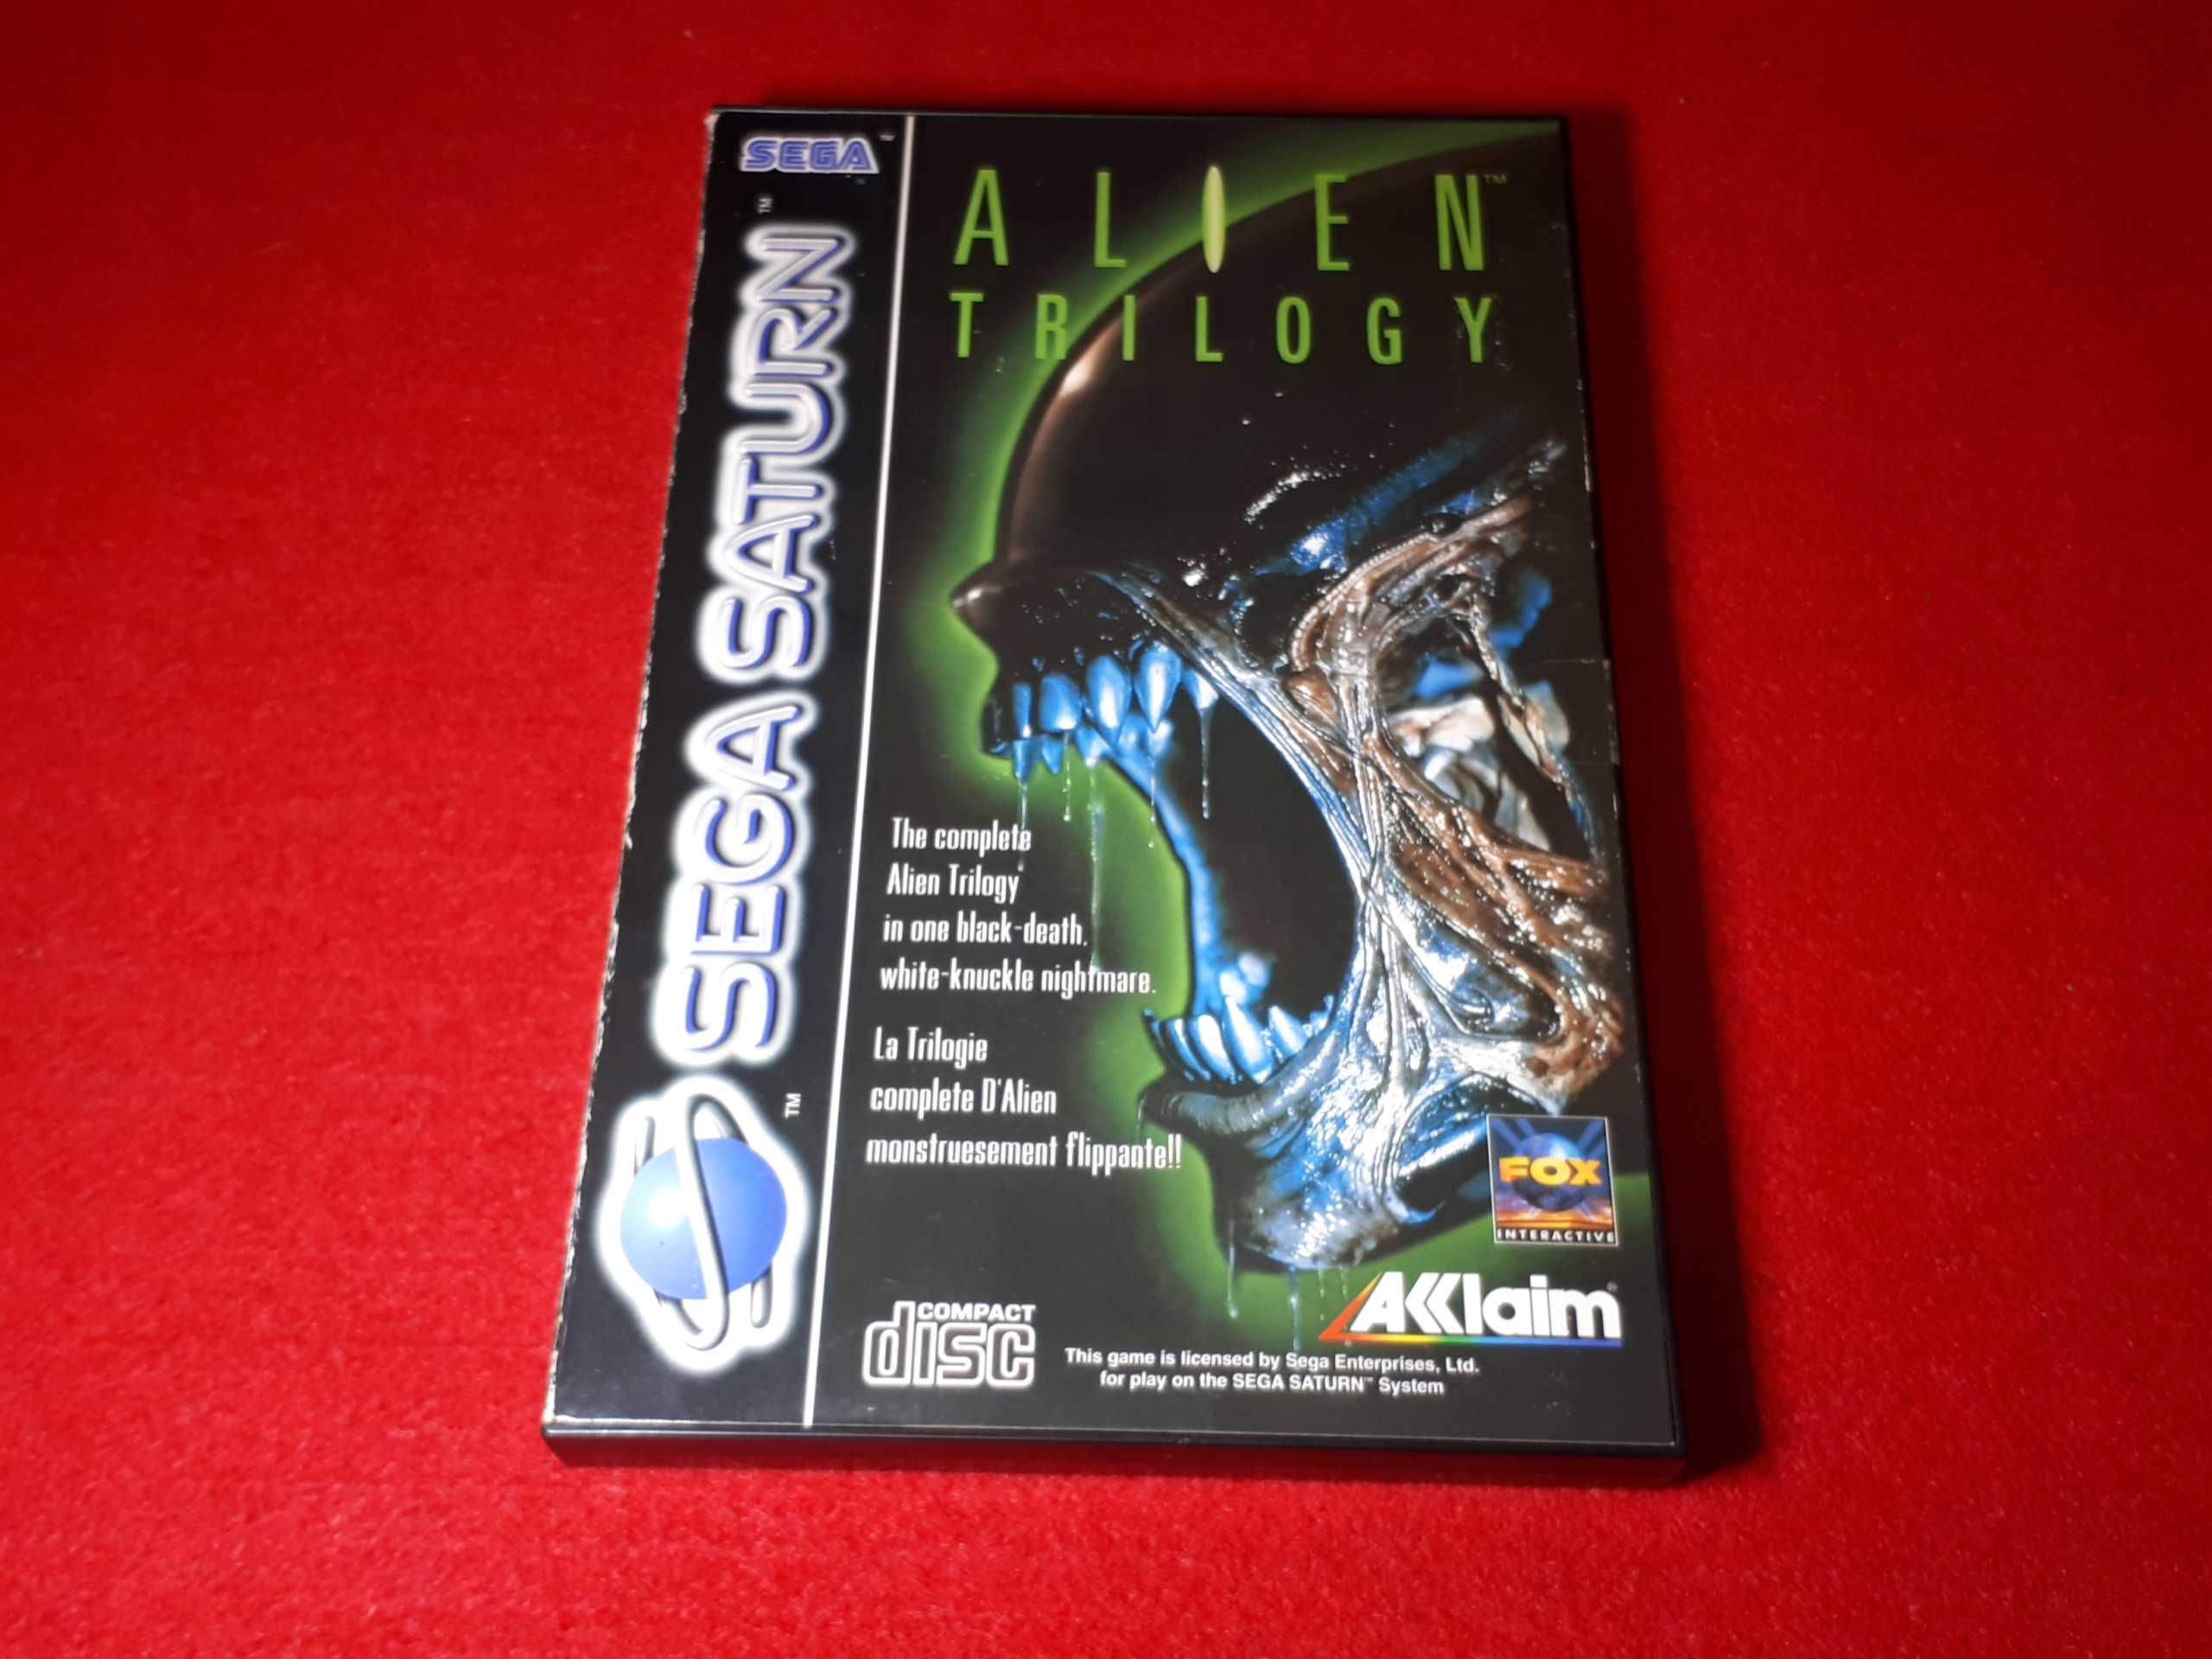 Alien trilogy. Alien Trilogy Sega Saturn. Sega Saturn Alien Trilogy (4s) обложка. Alien Trilogy Nintendo 64 обложка.